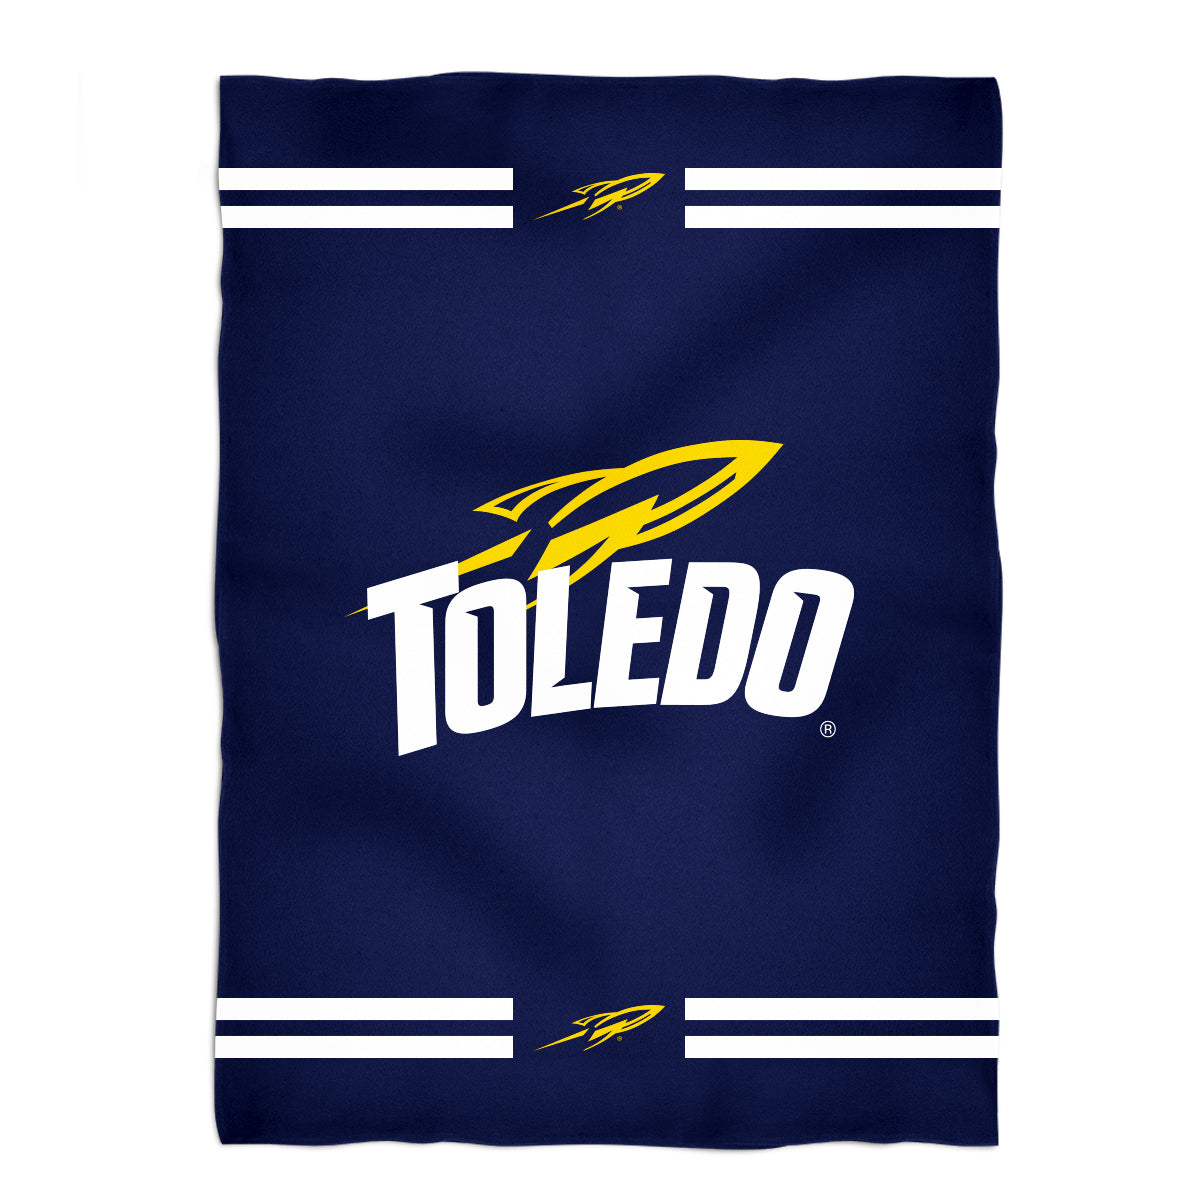 University of Toledo Rockets Game Day Soft Premium Fleece Navy Throw Blanket 40 x 58 Logo and Stripes